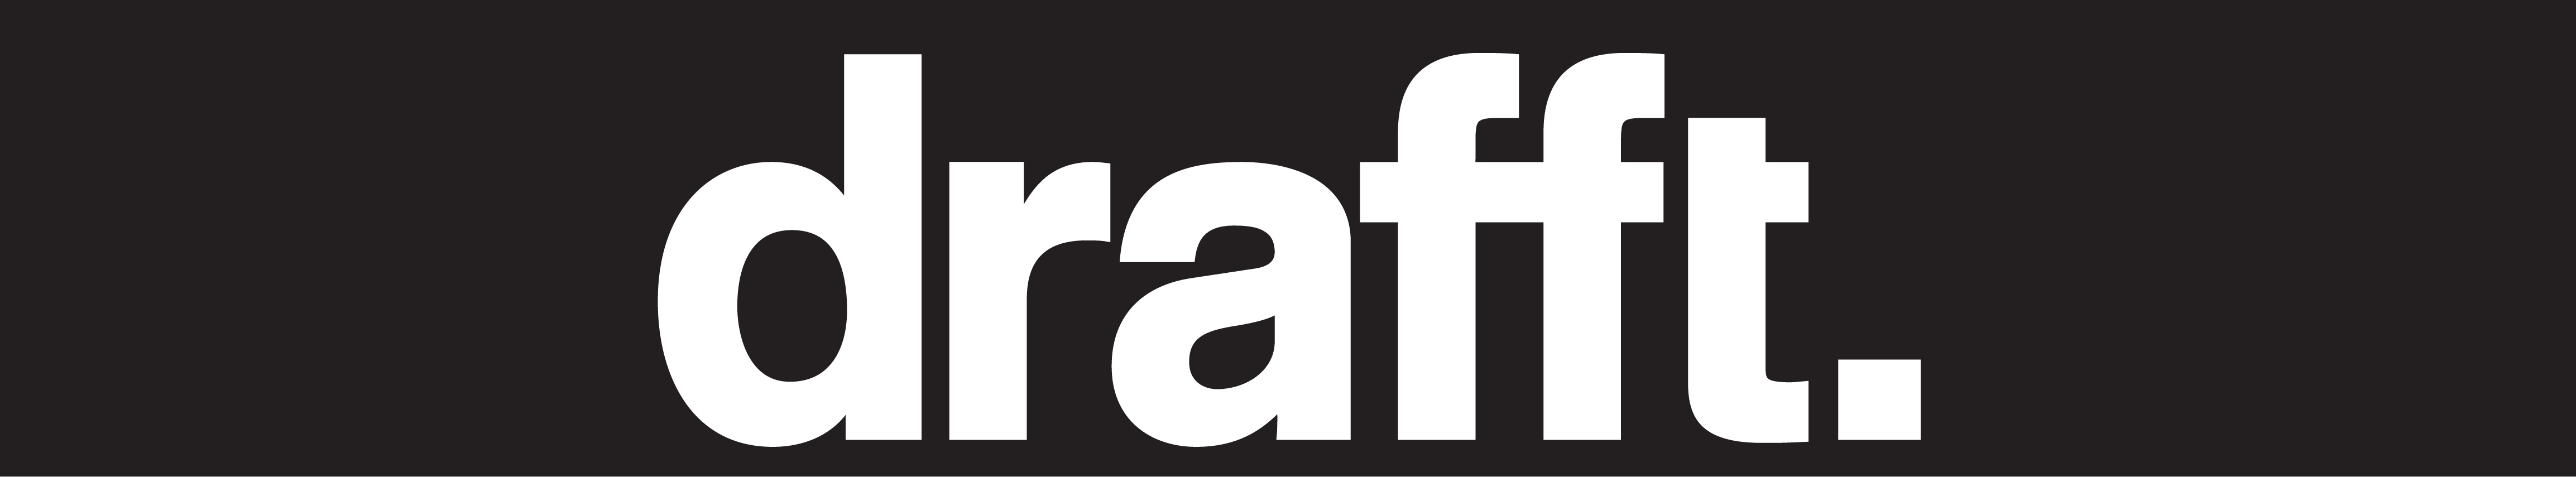 Baner profilu użytkownika Drafft. Diseñadores